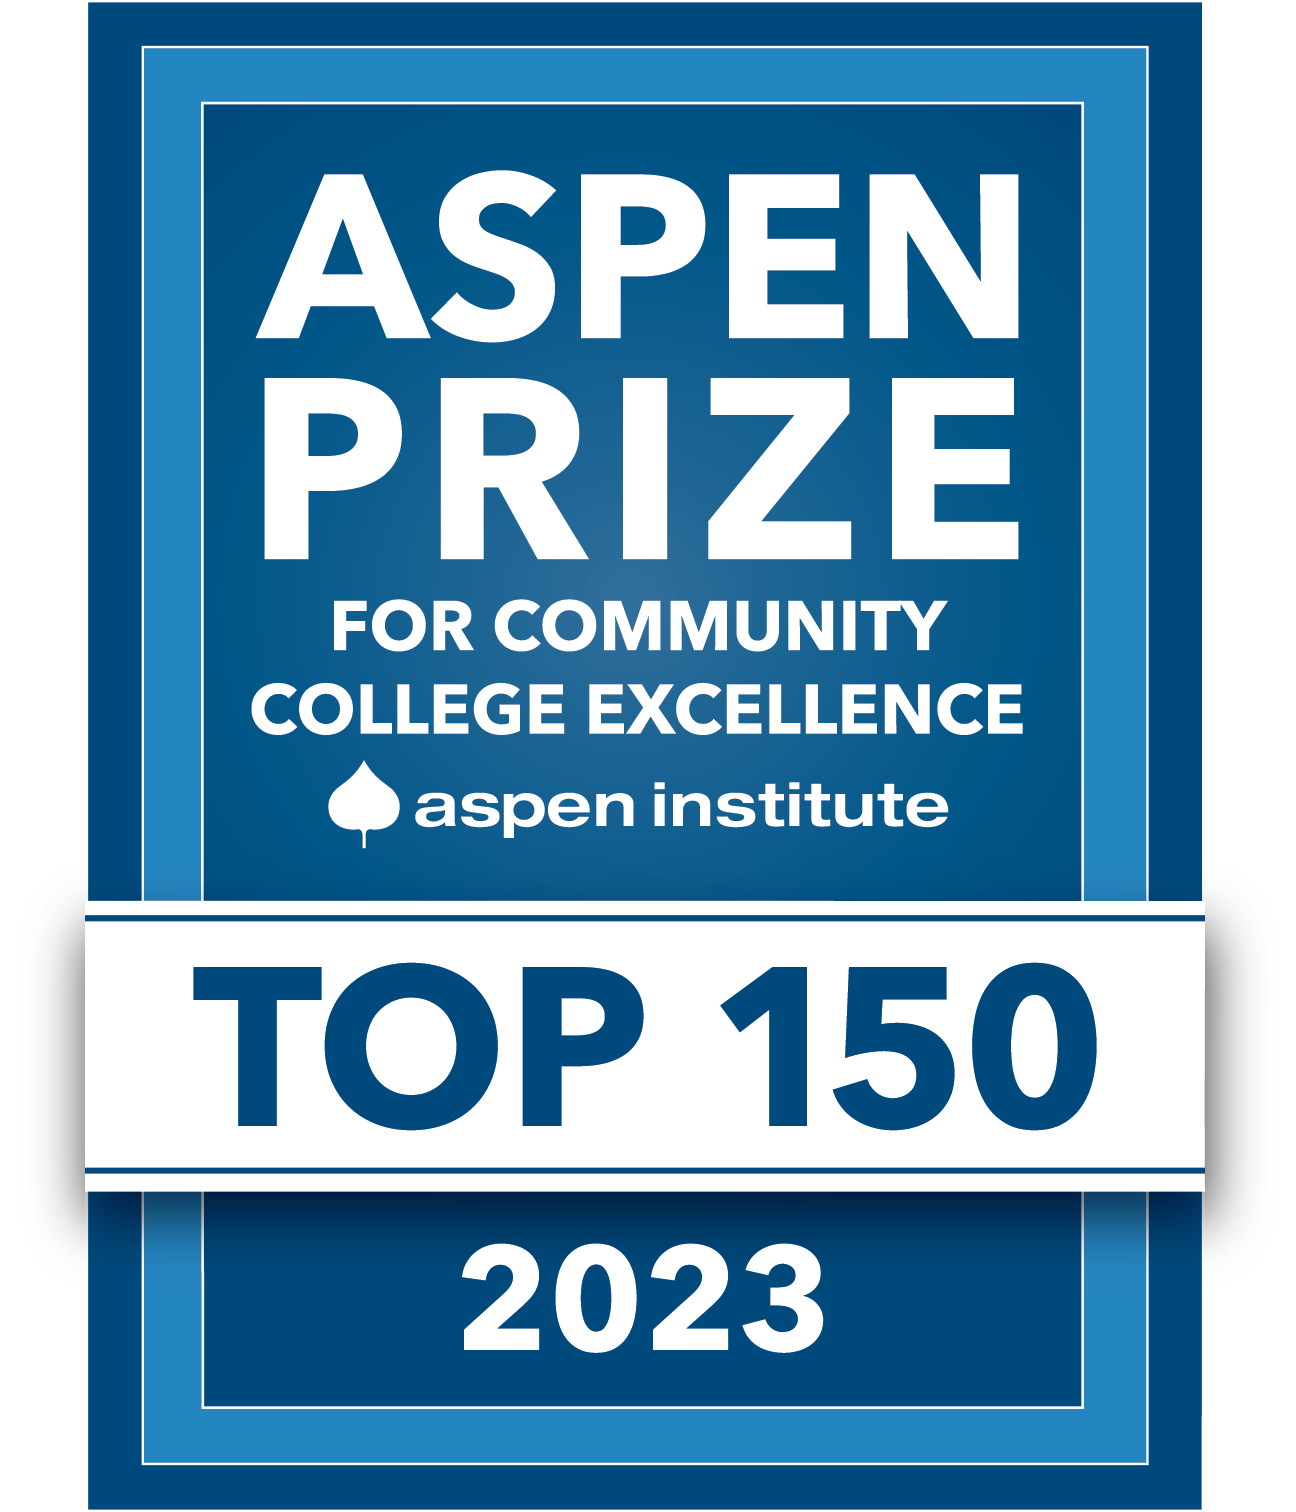 Aspen Prize 2023